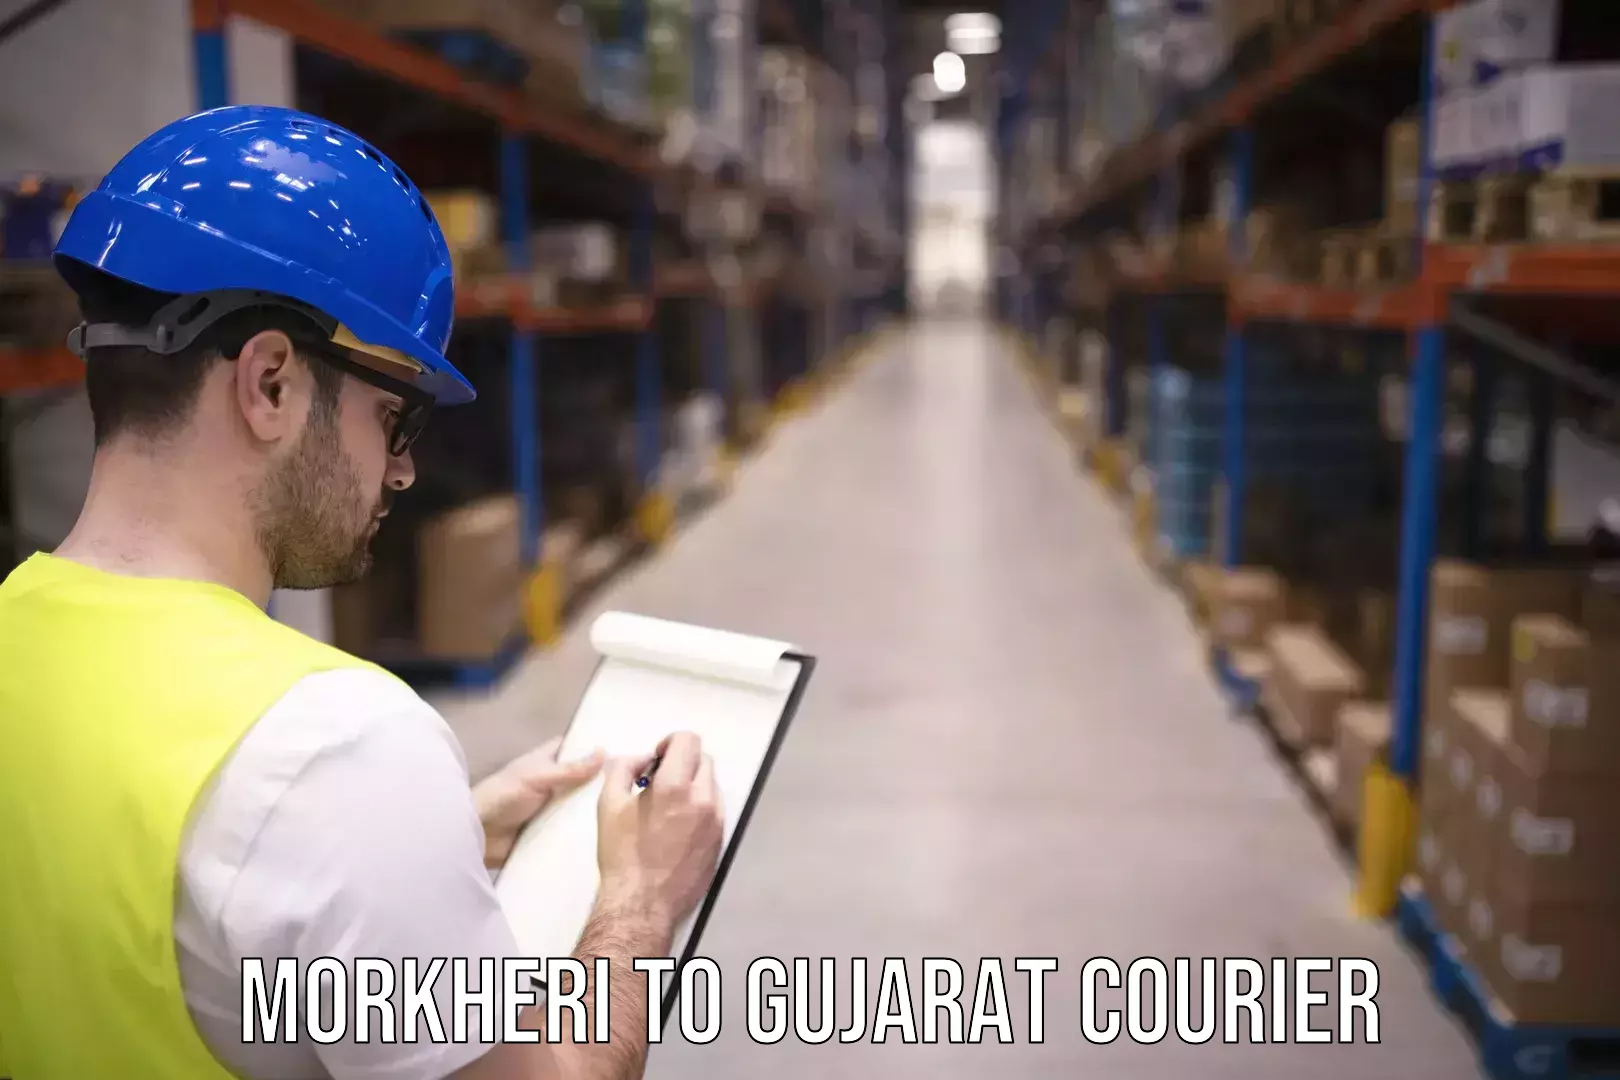 Courier service comparison Morkheri to Gujarat